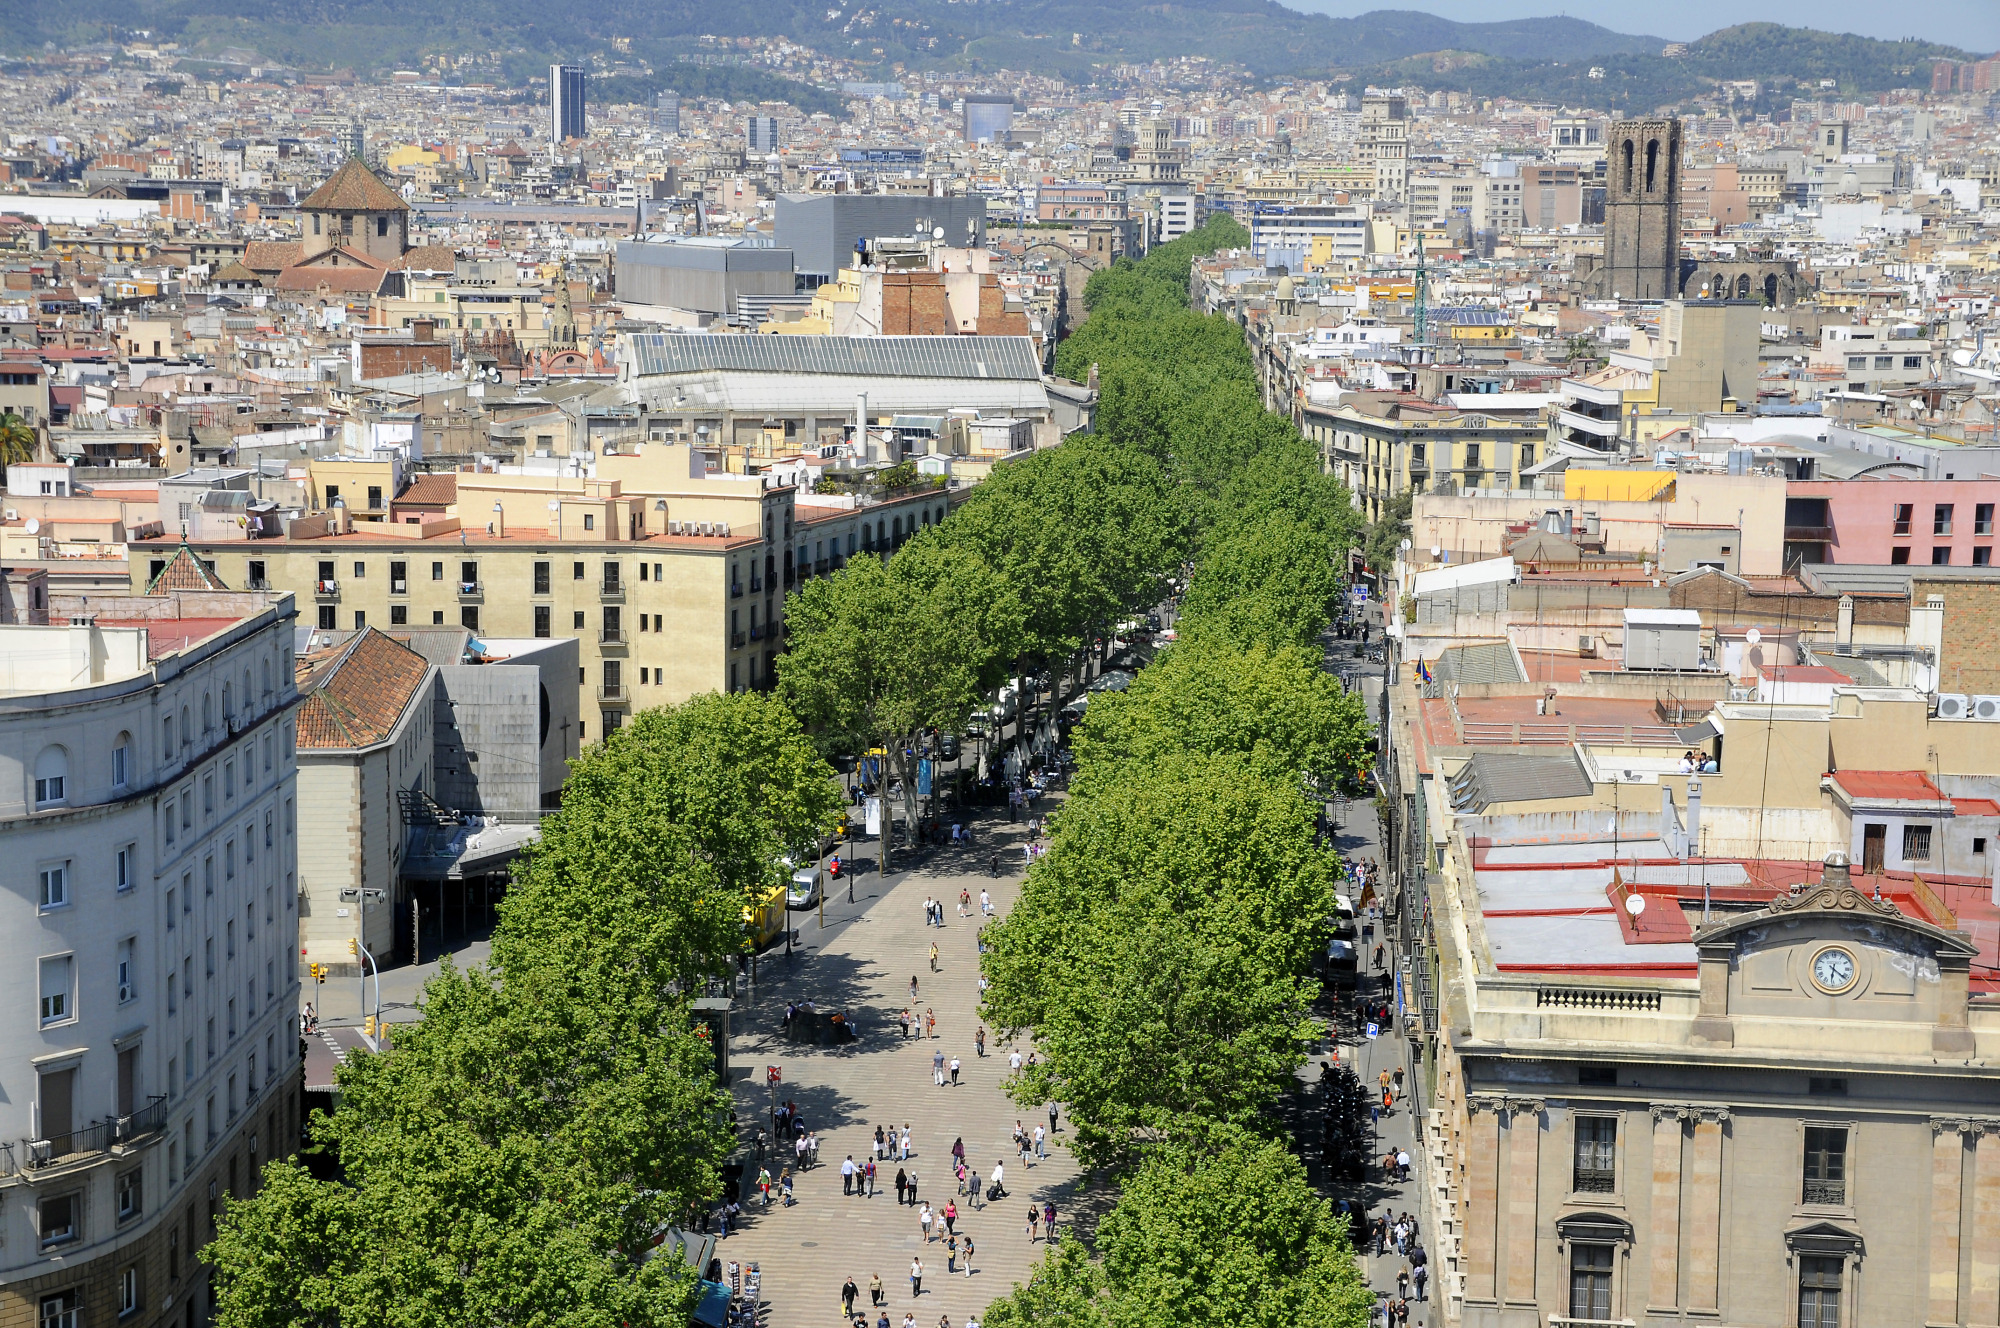 Columbus Monument - Overlooking La Rambla | Barcelona (2) | Pictures ...